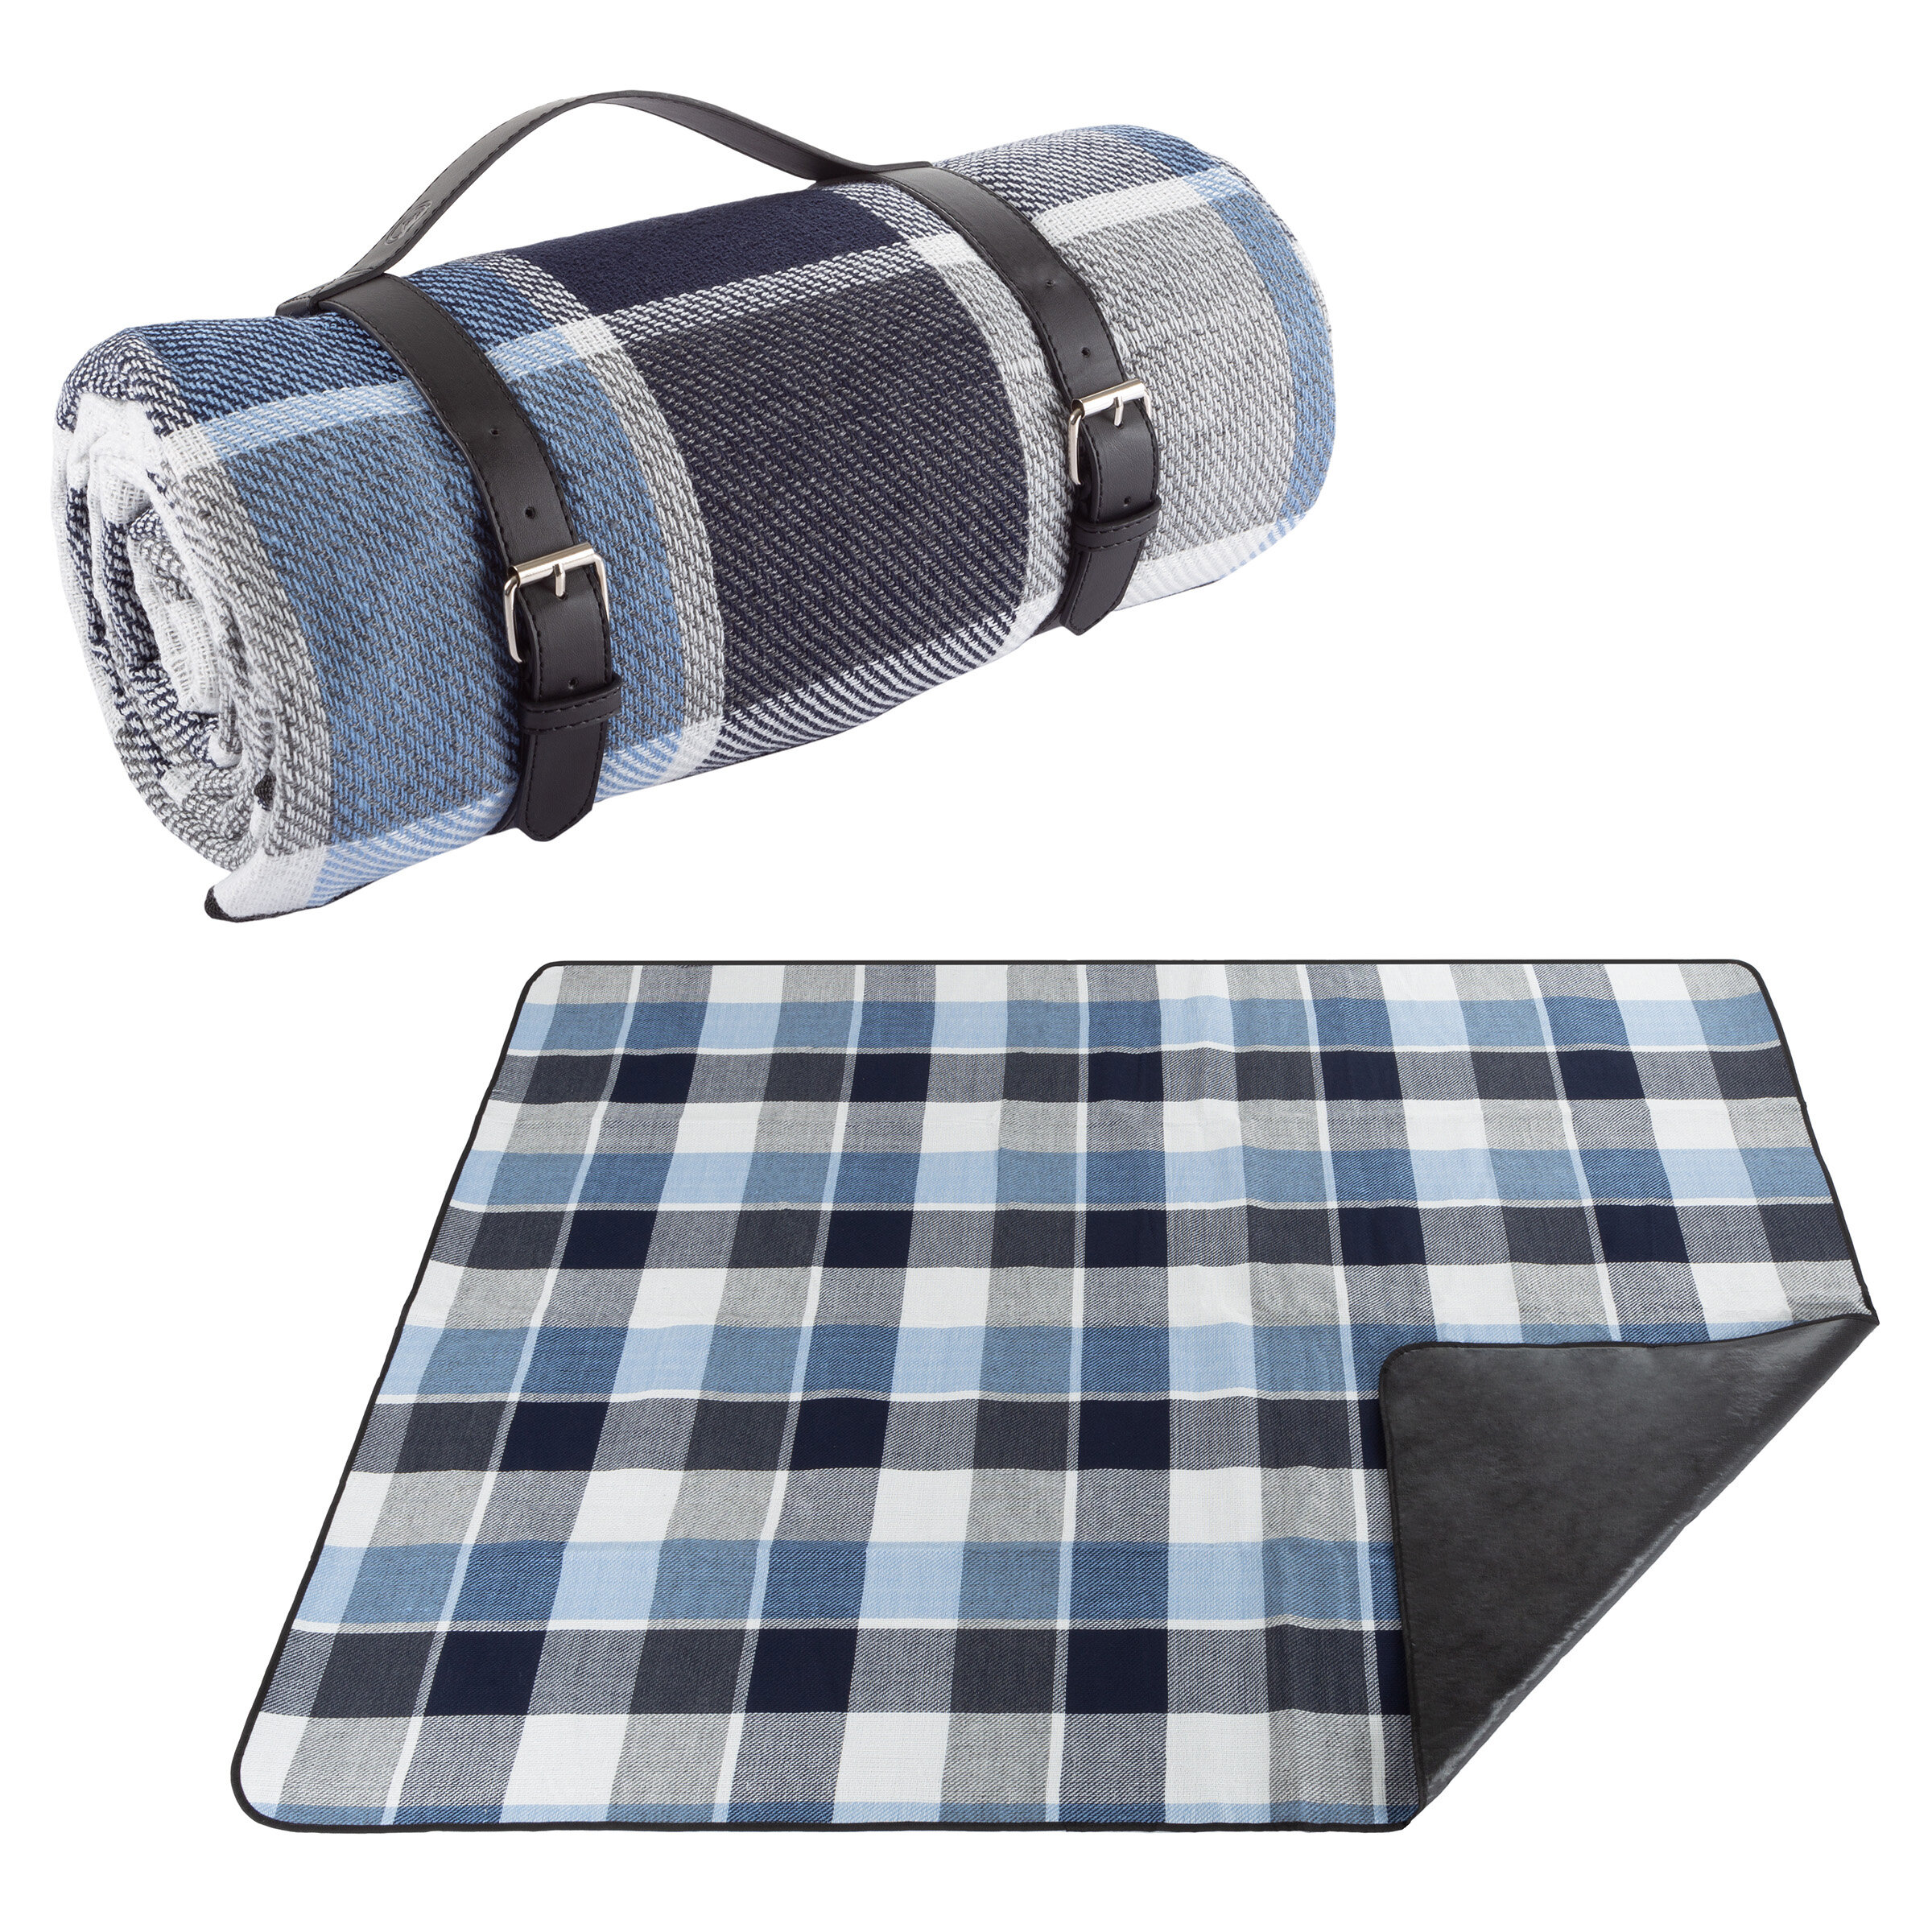 washable waterproof picnic blanket